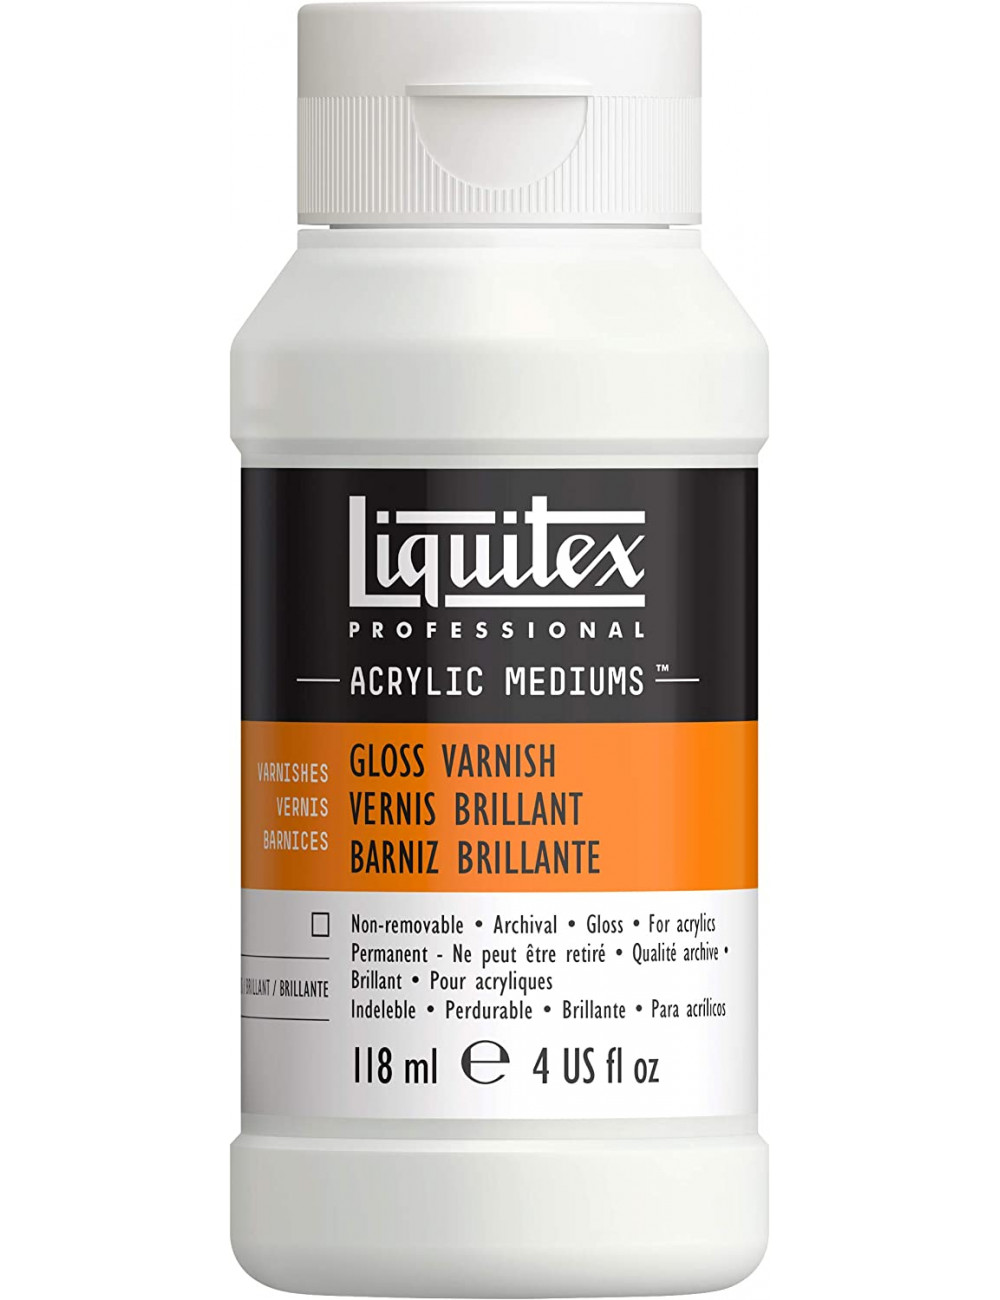 Liquitex - High Gloss Varnish (8 oz)